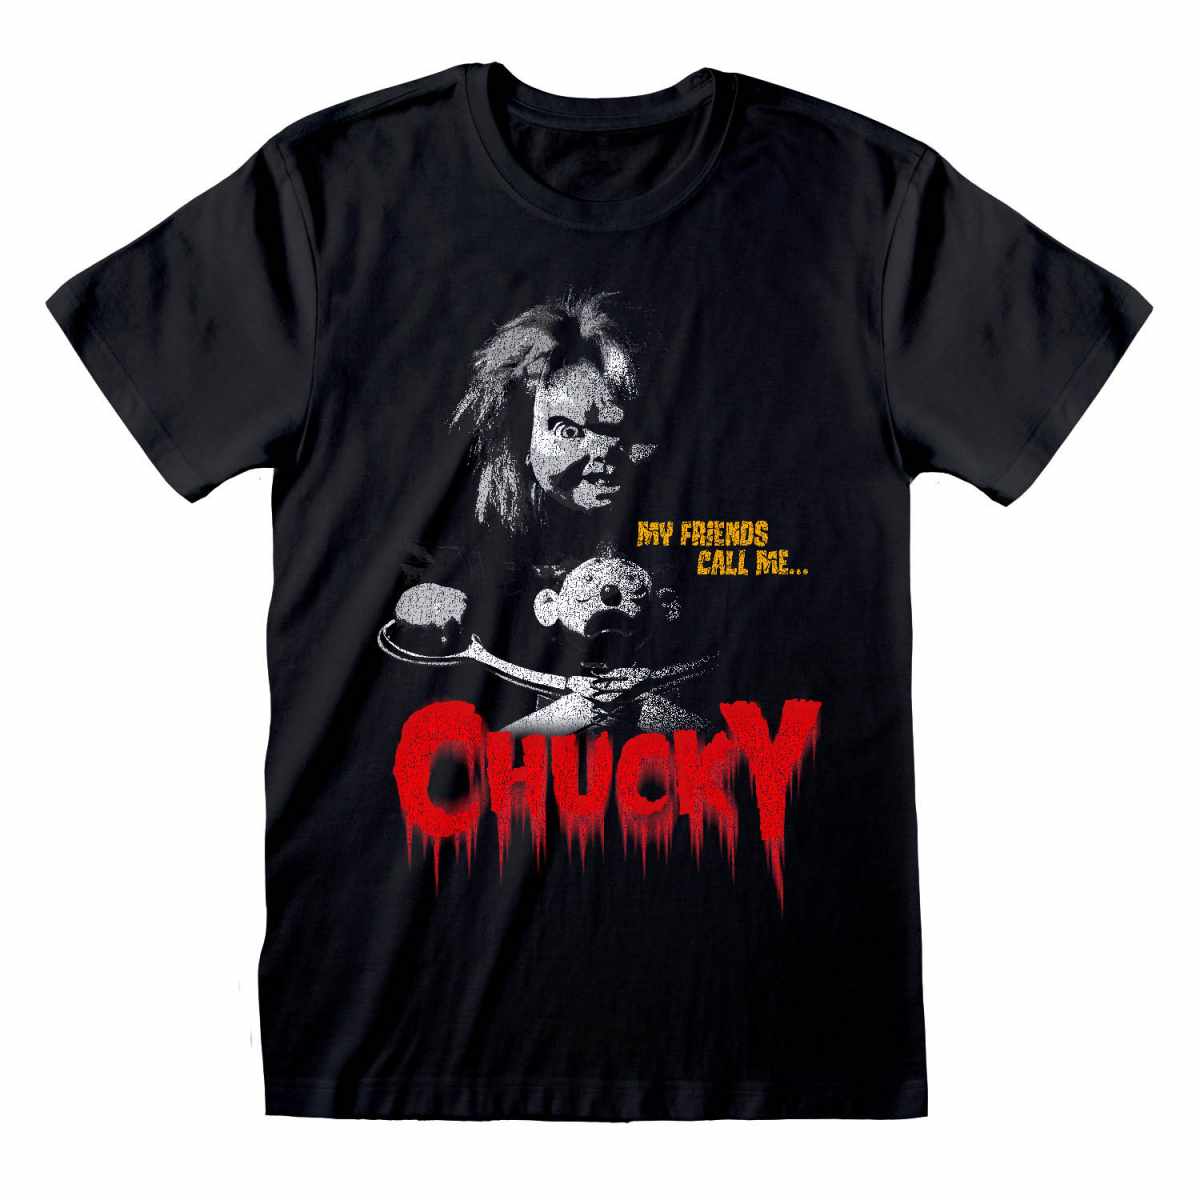 Childs Play T-Shirt | My Friends Call Me Chucky